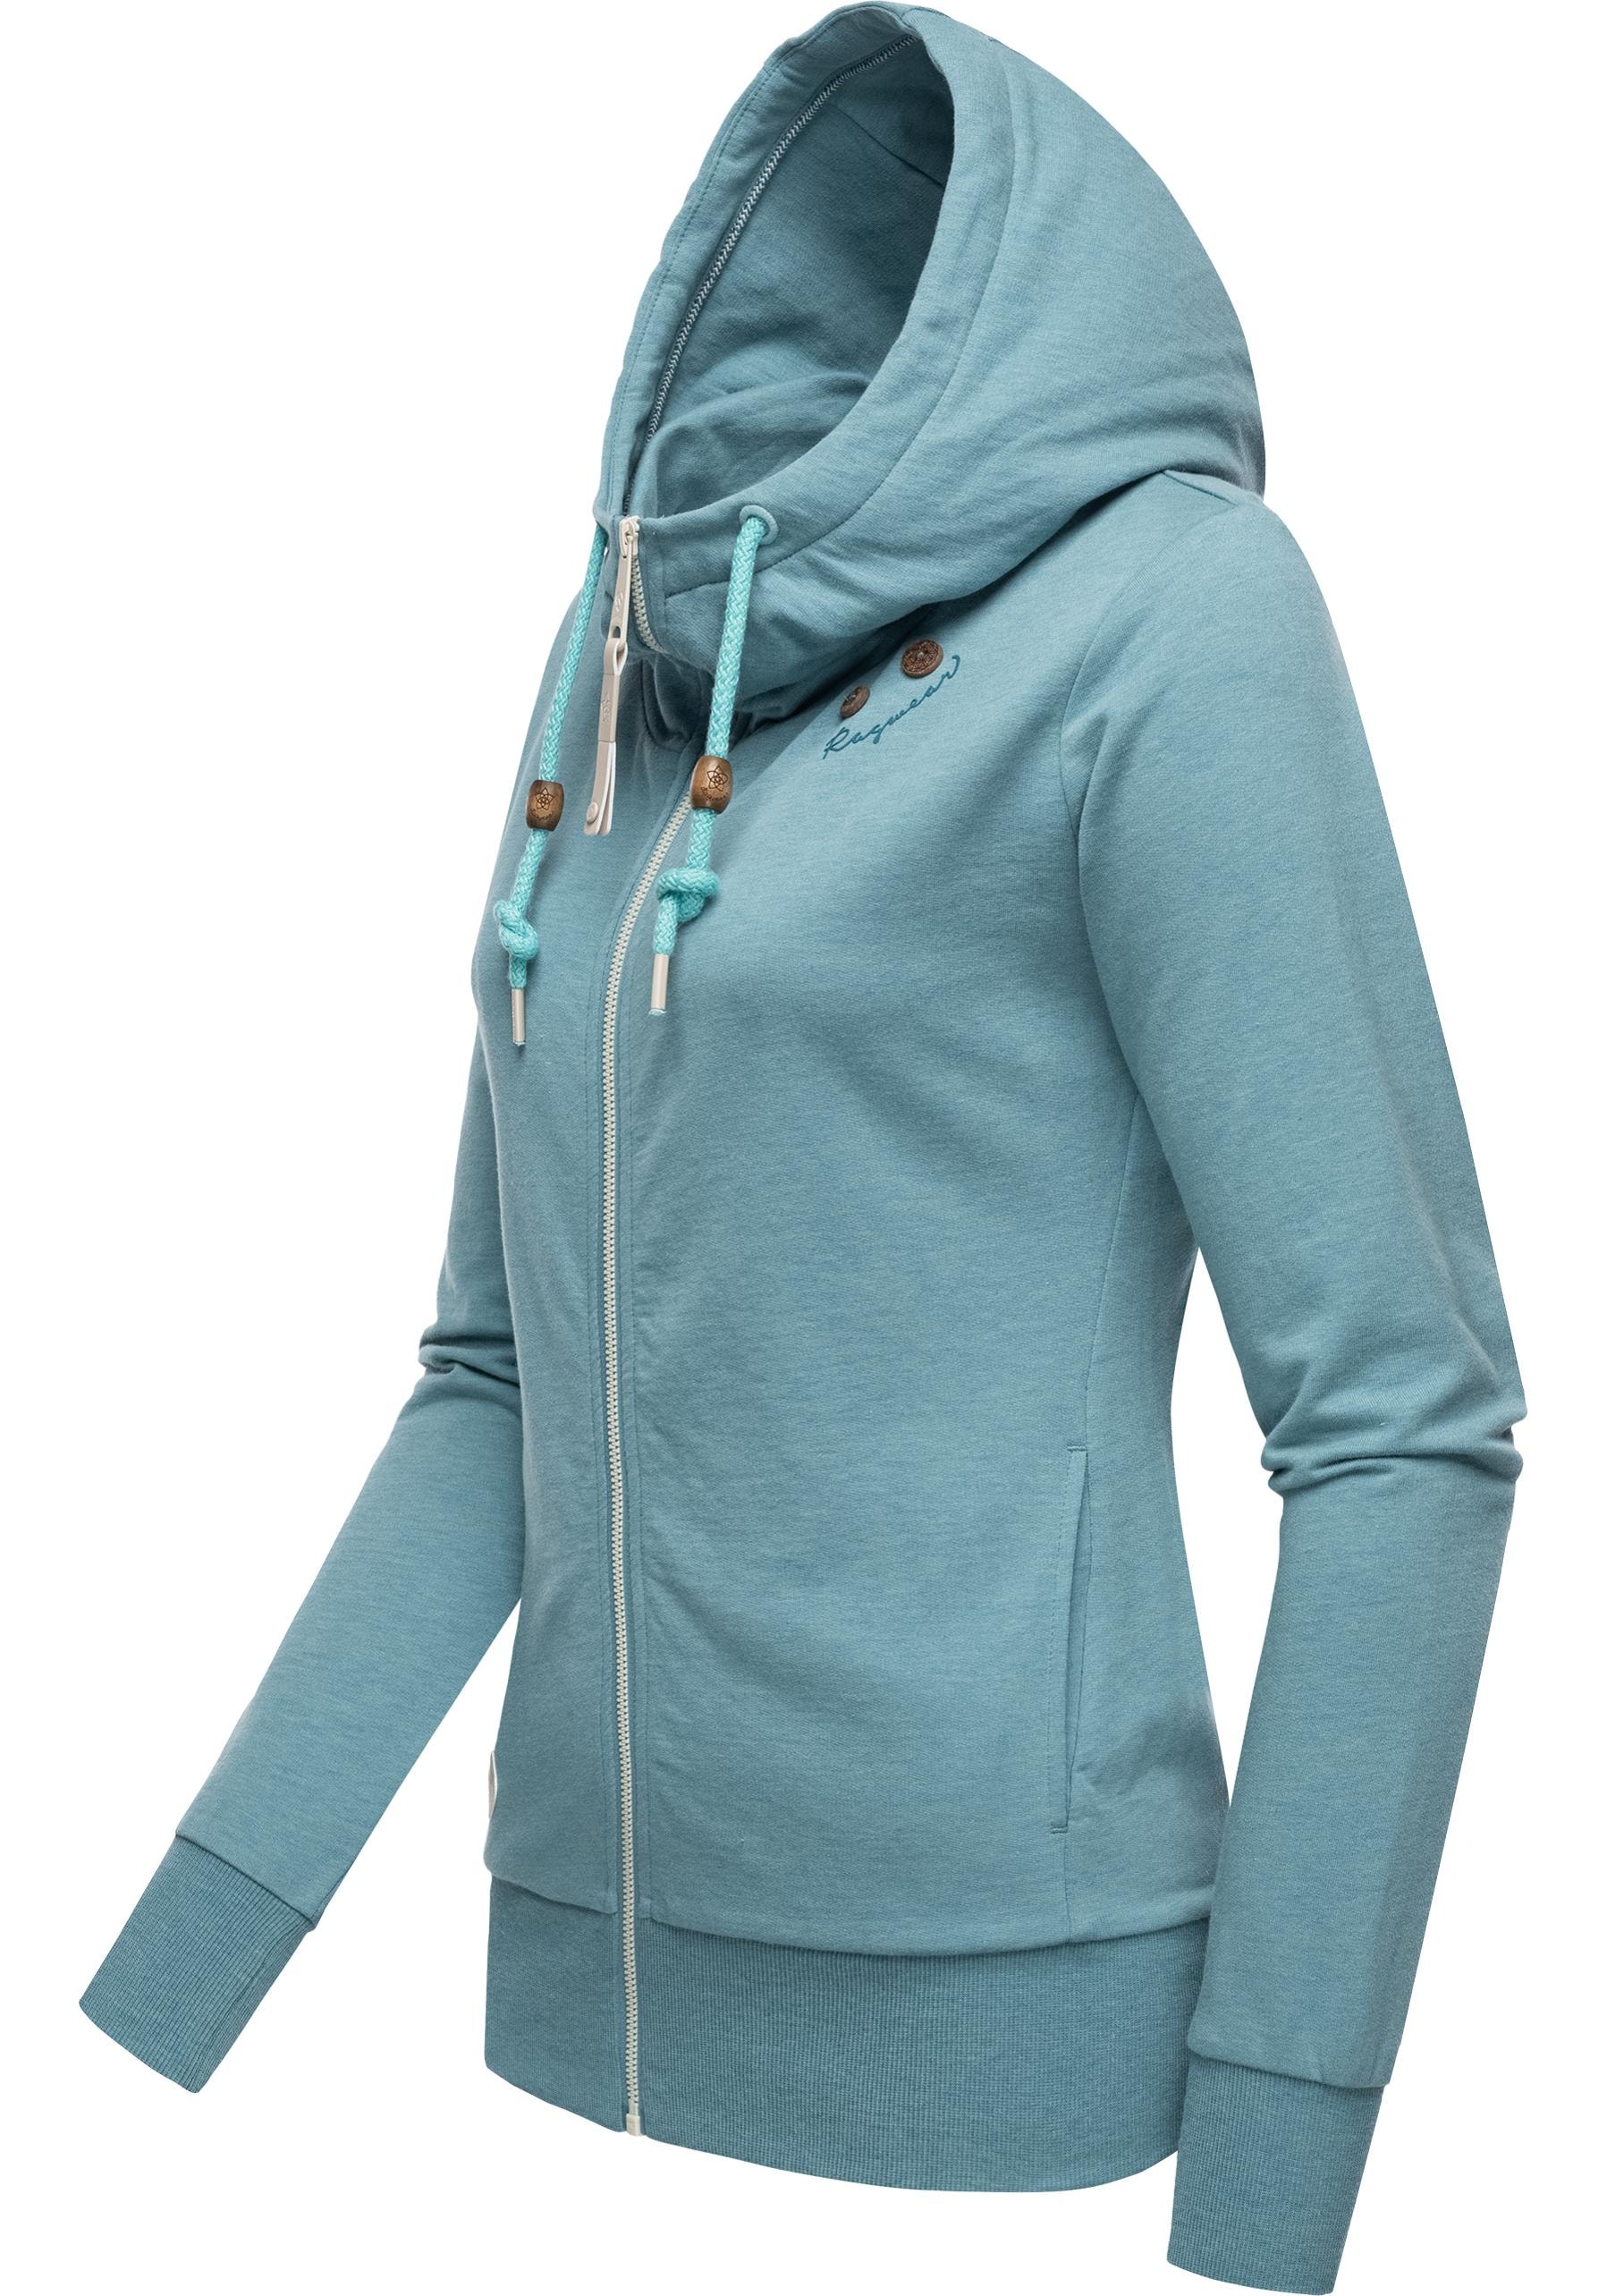 Ragwear Kapuzensweatjacke »Paya Intl.«, sportlicher Damen Kapuzensweater mit Kordeln